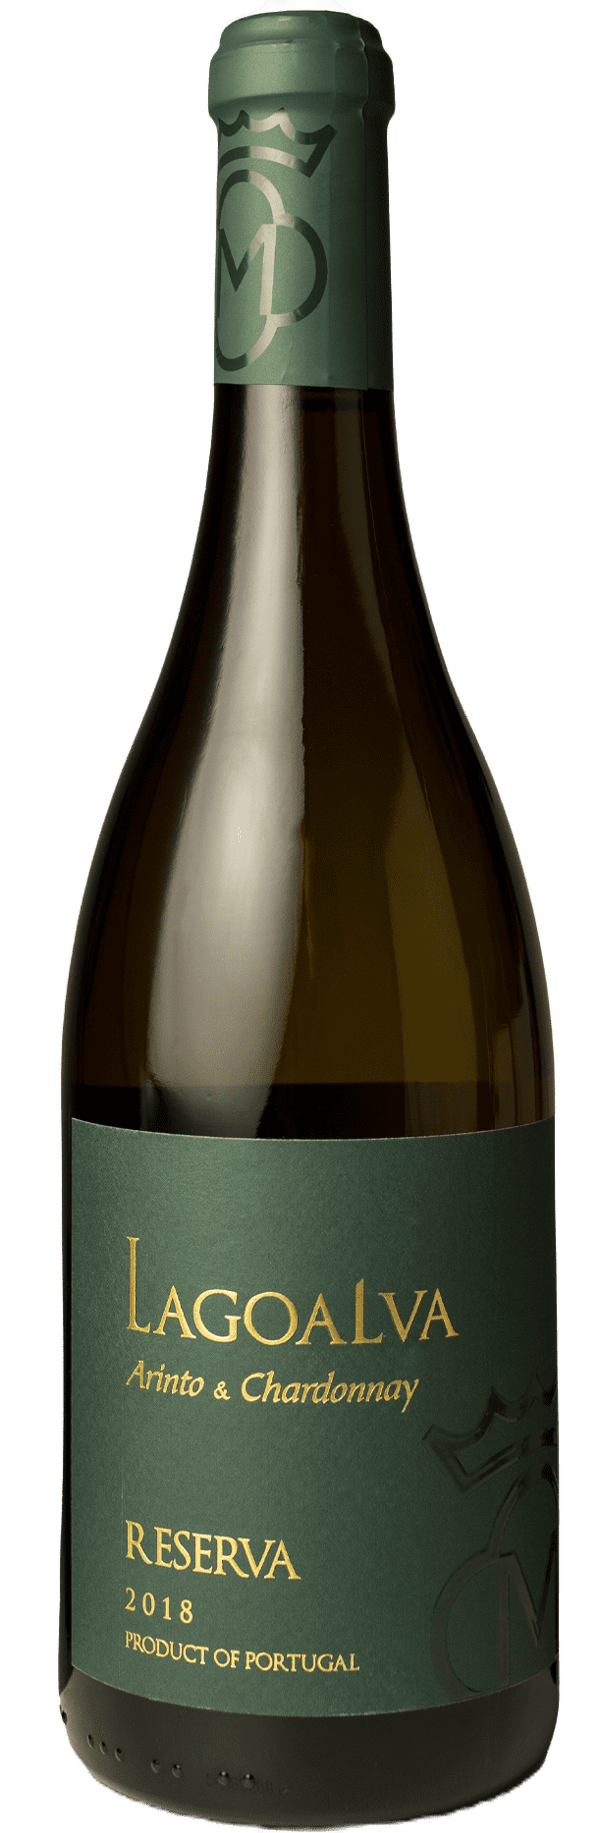 Lagoalva Arinto & Chardonnay 2021